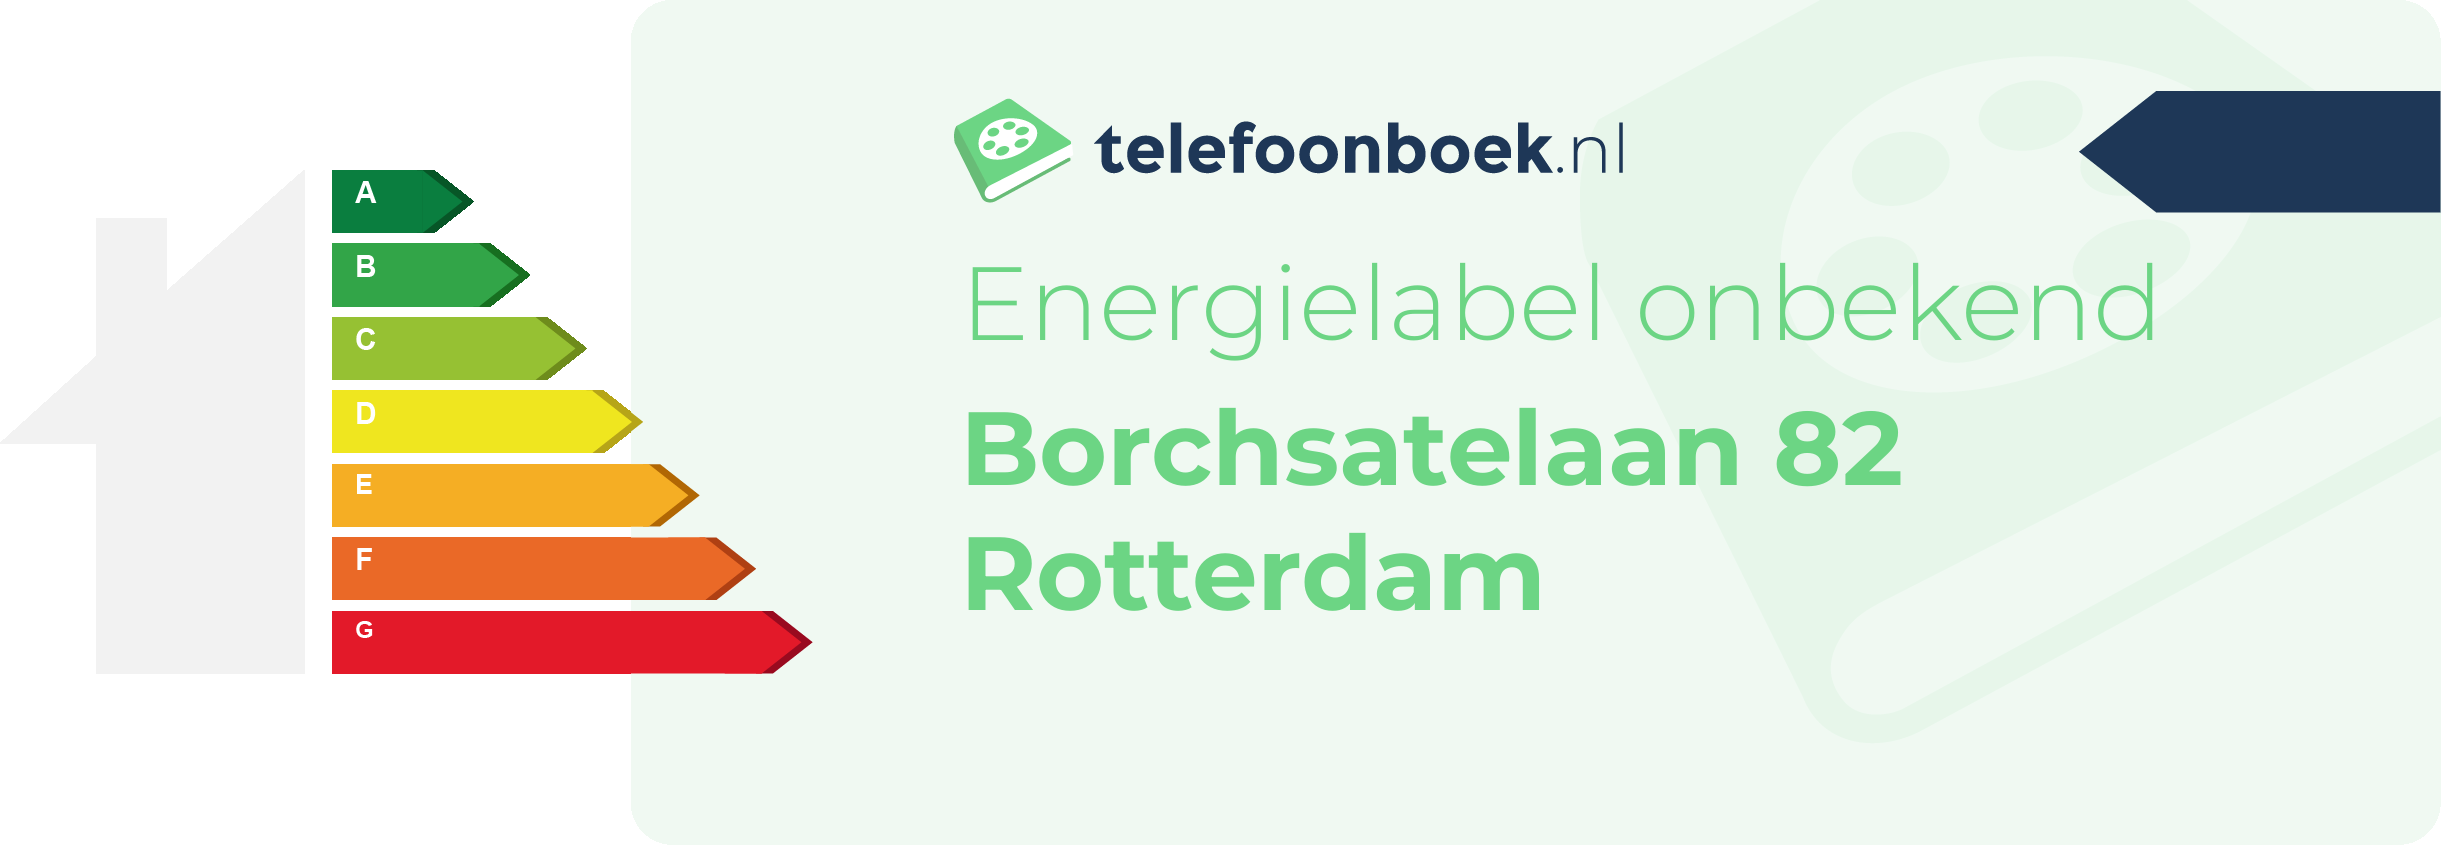 Energielabel Borchsatelaan 82 Rotterdam